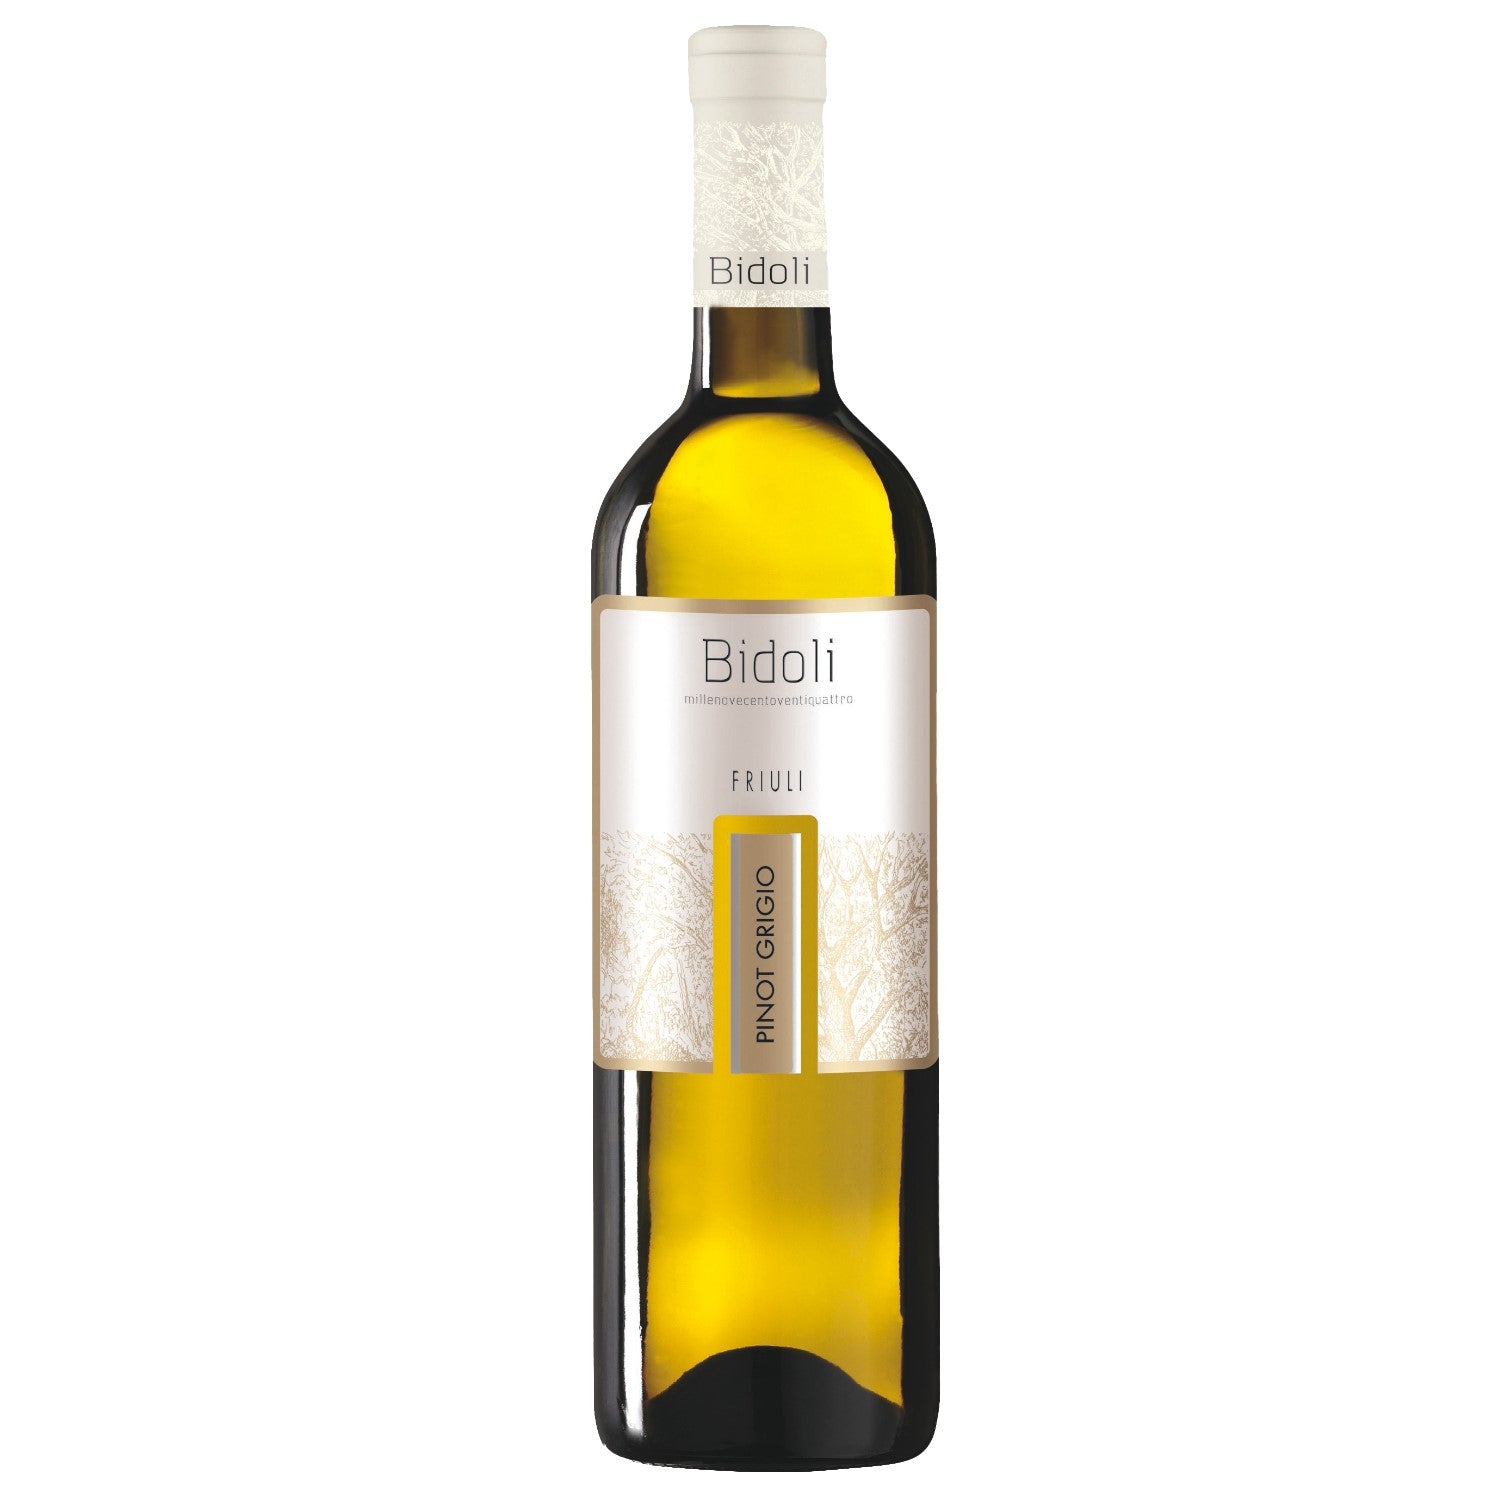 Bidoli Vini Pinot Grigio DOC Friuli Grave Weißwein Wein trocken Italien (6 x 0.75l) - Versanel -